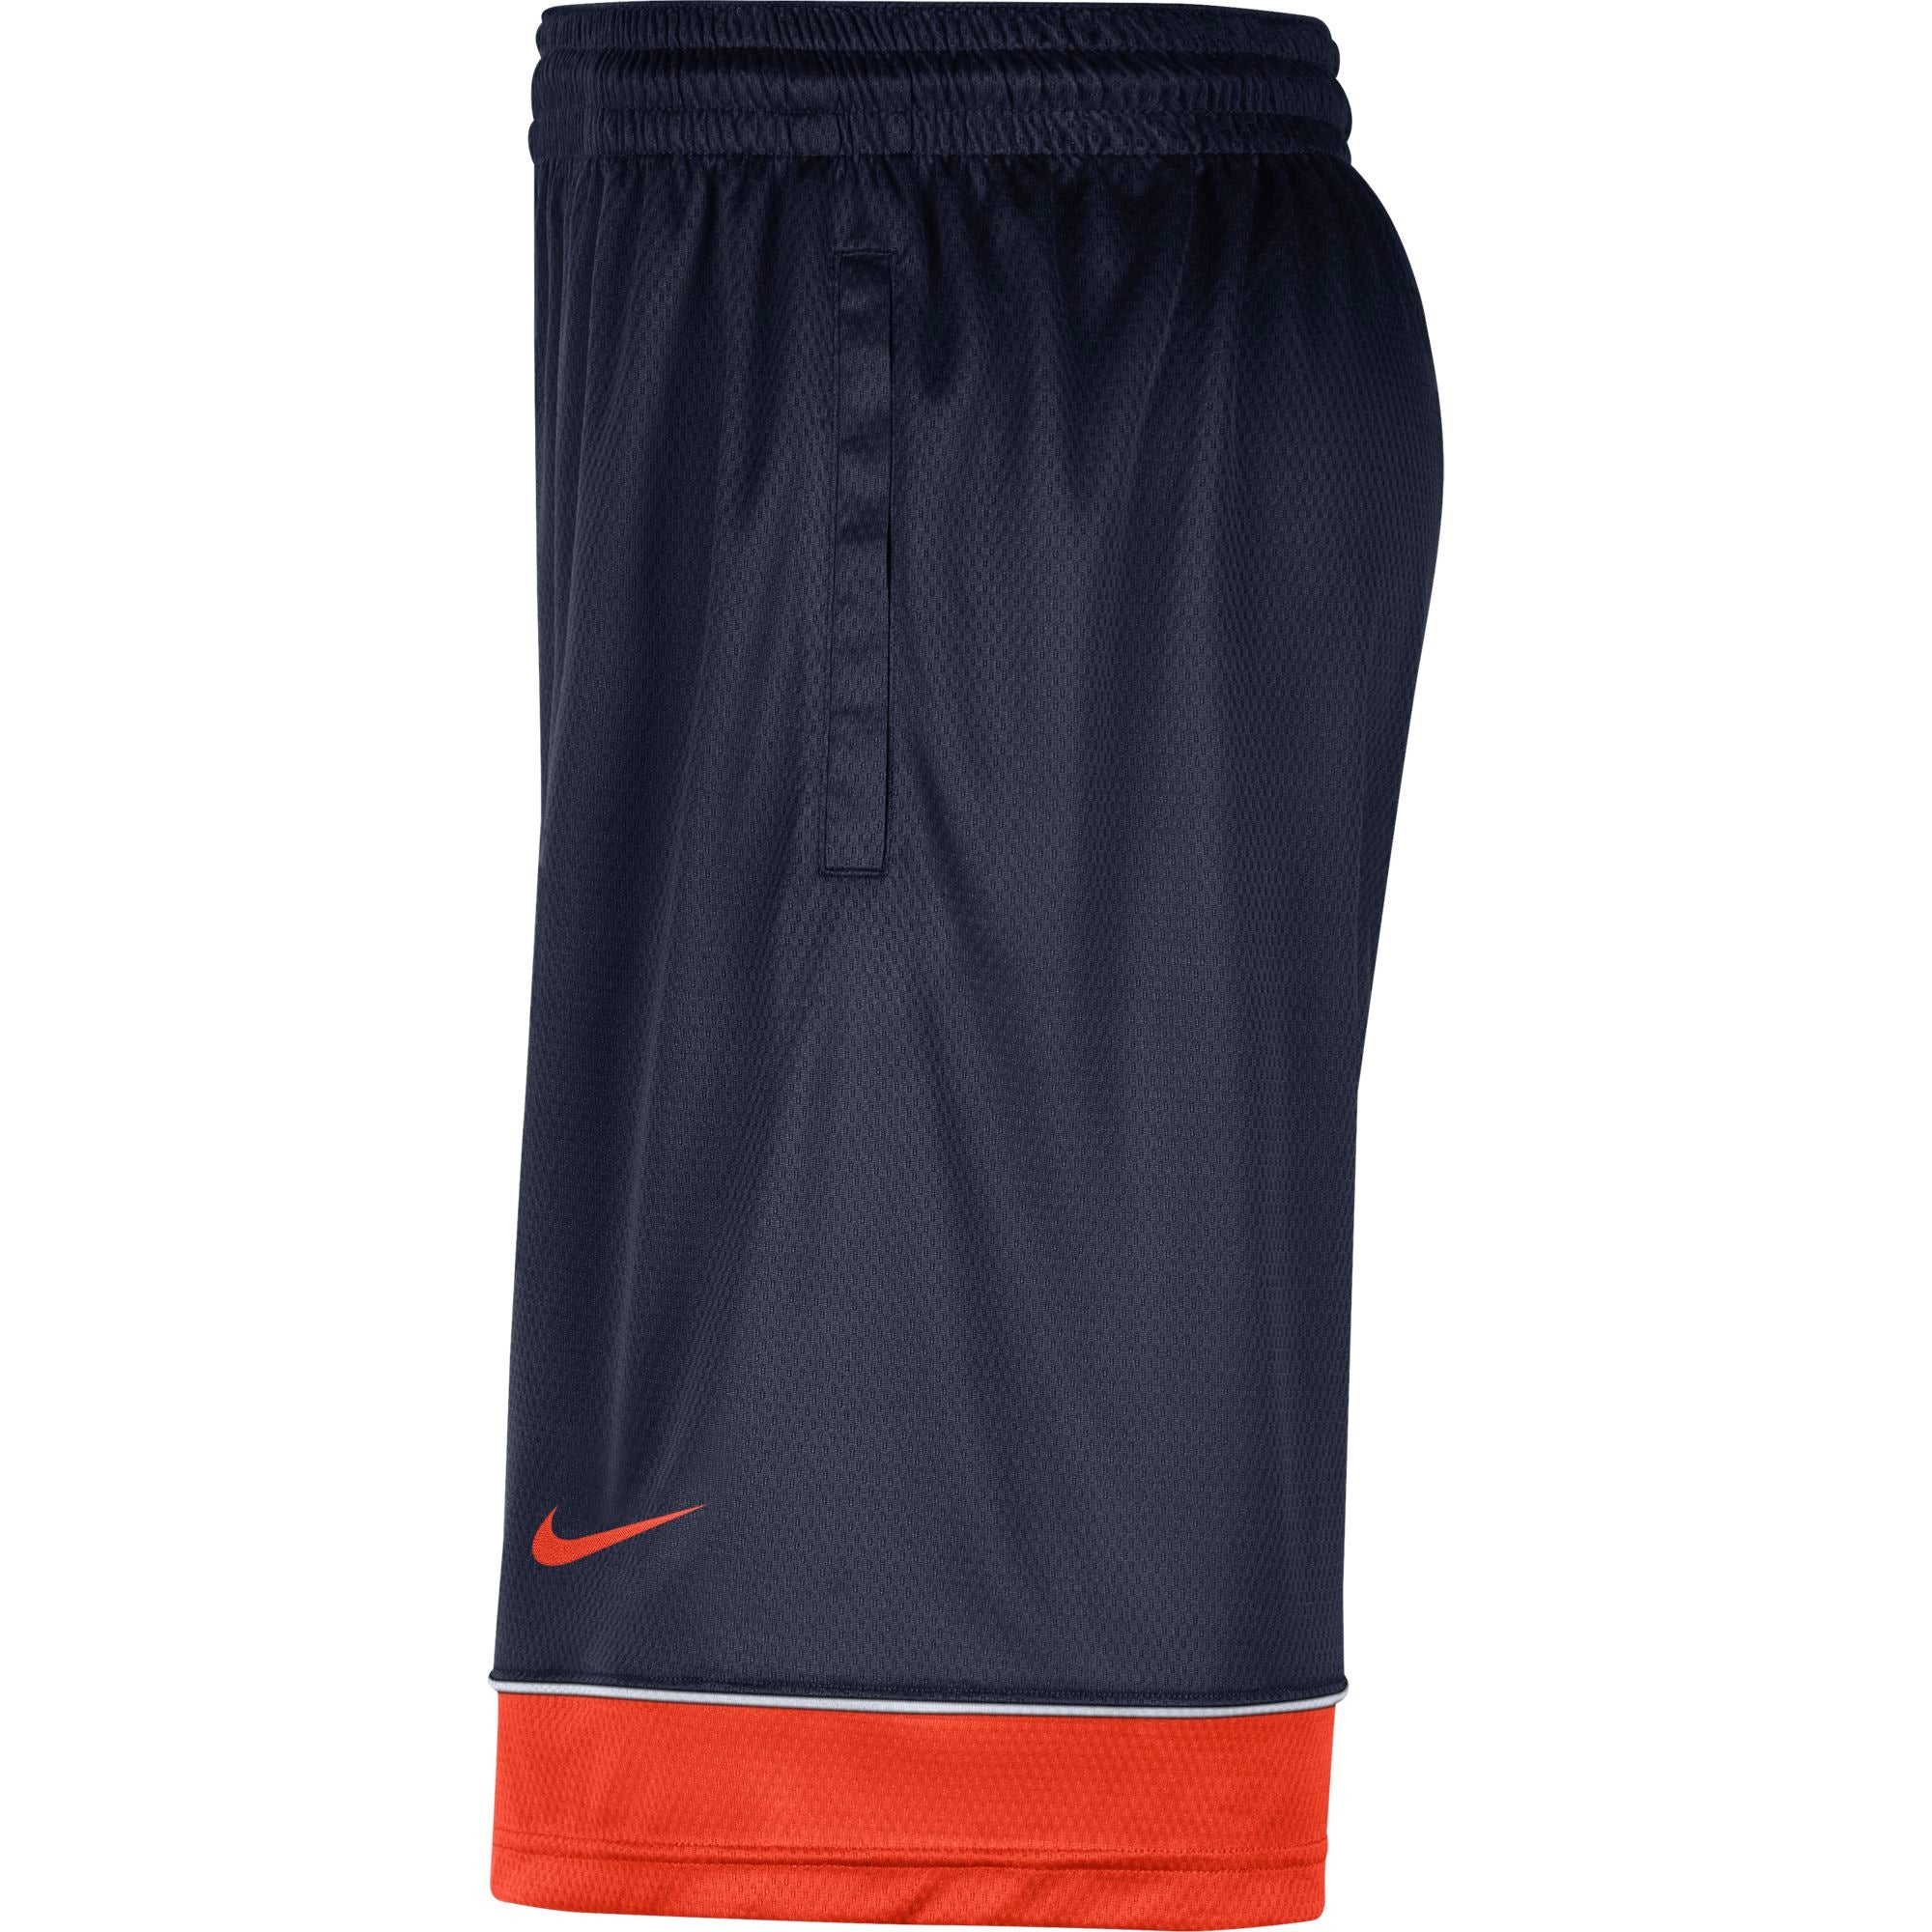 Buy Nike Dri-Fit Shorts Boys Black online | Tennis Point COM